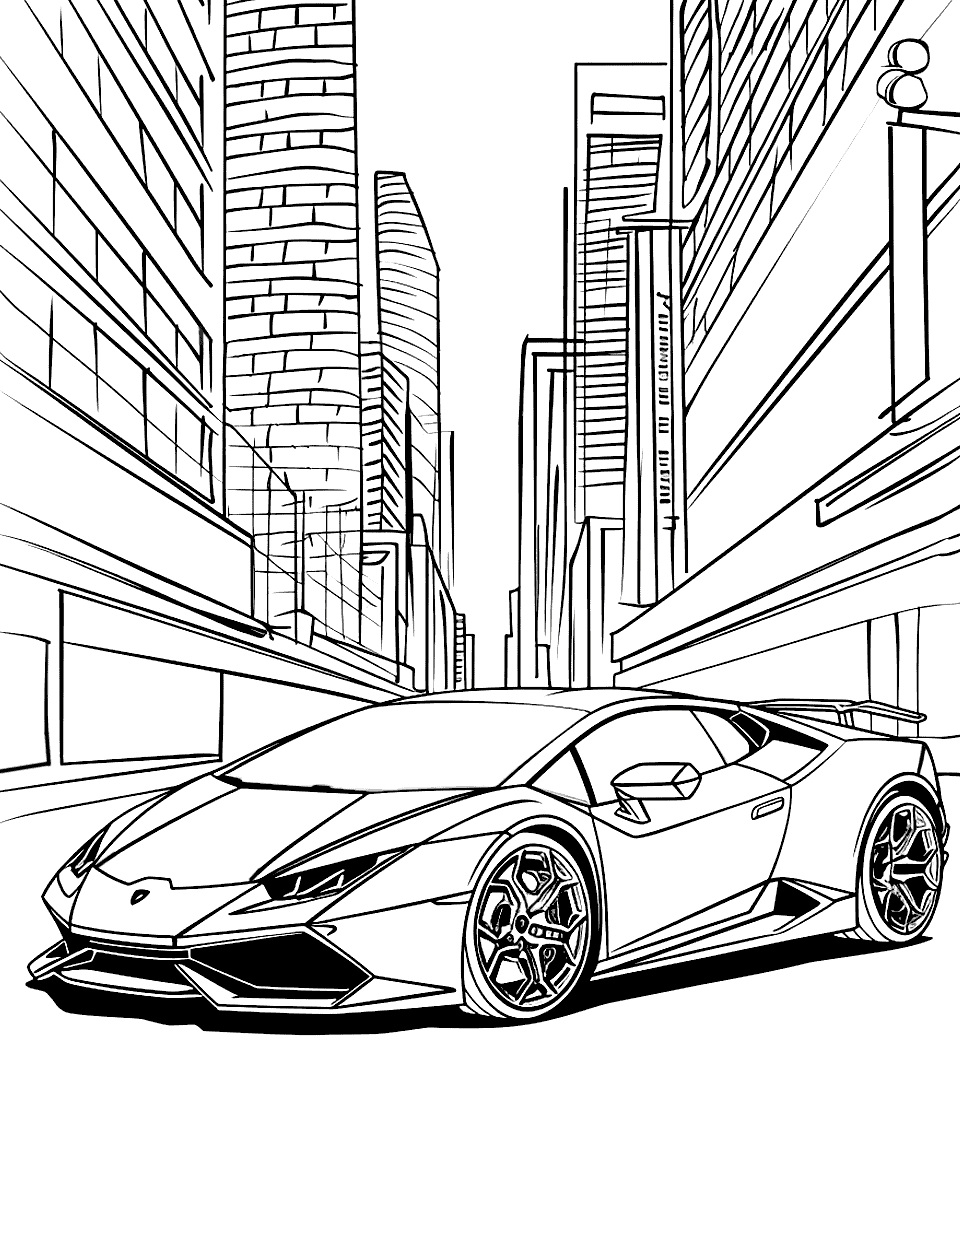 Lambo in the City Lamborghini Coloring Page - A Lamborghini driving through a cityscape with tall buildings.